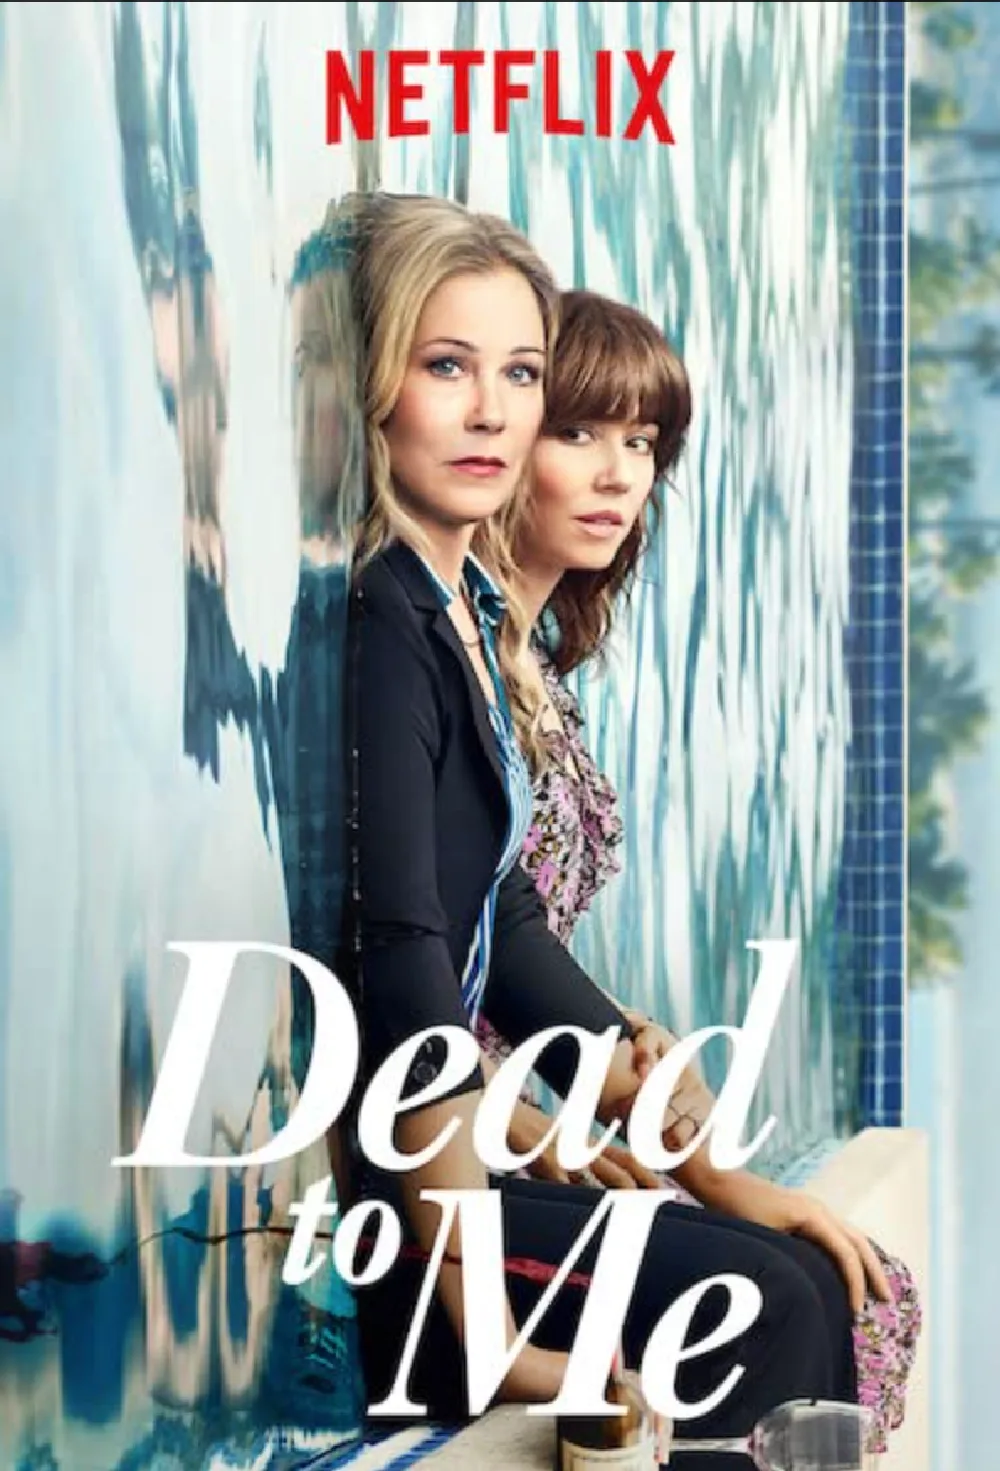 Dead to Me: Season 3, Official Trailer